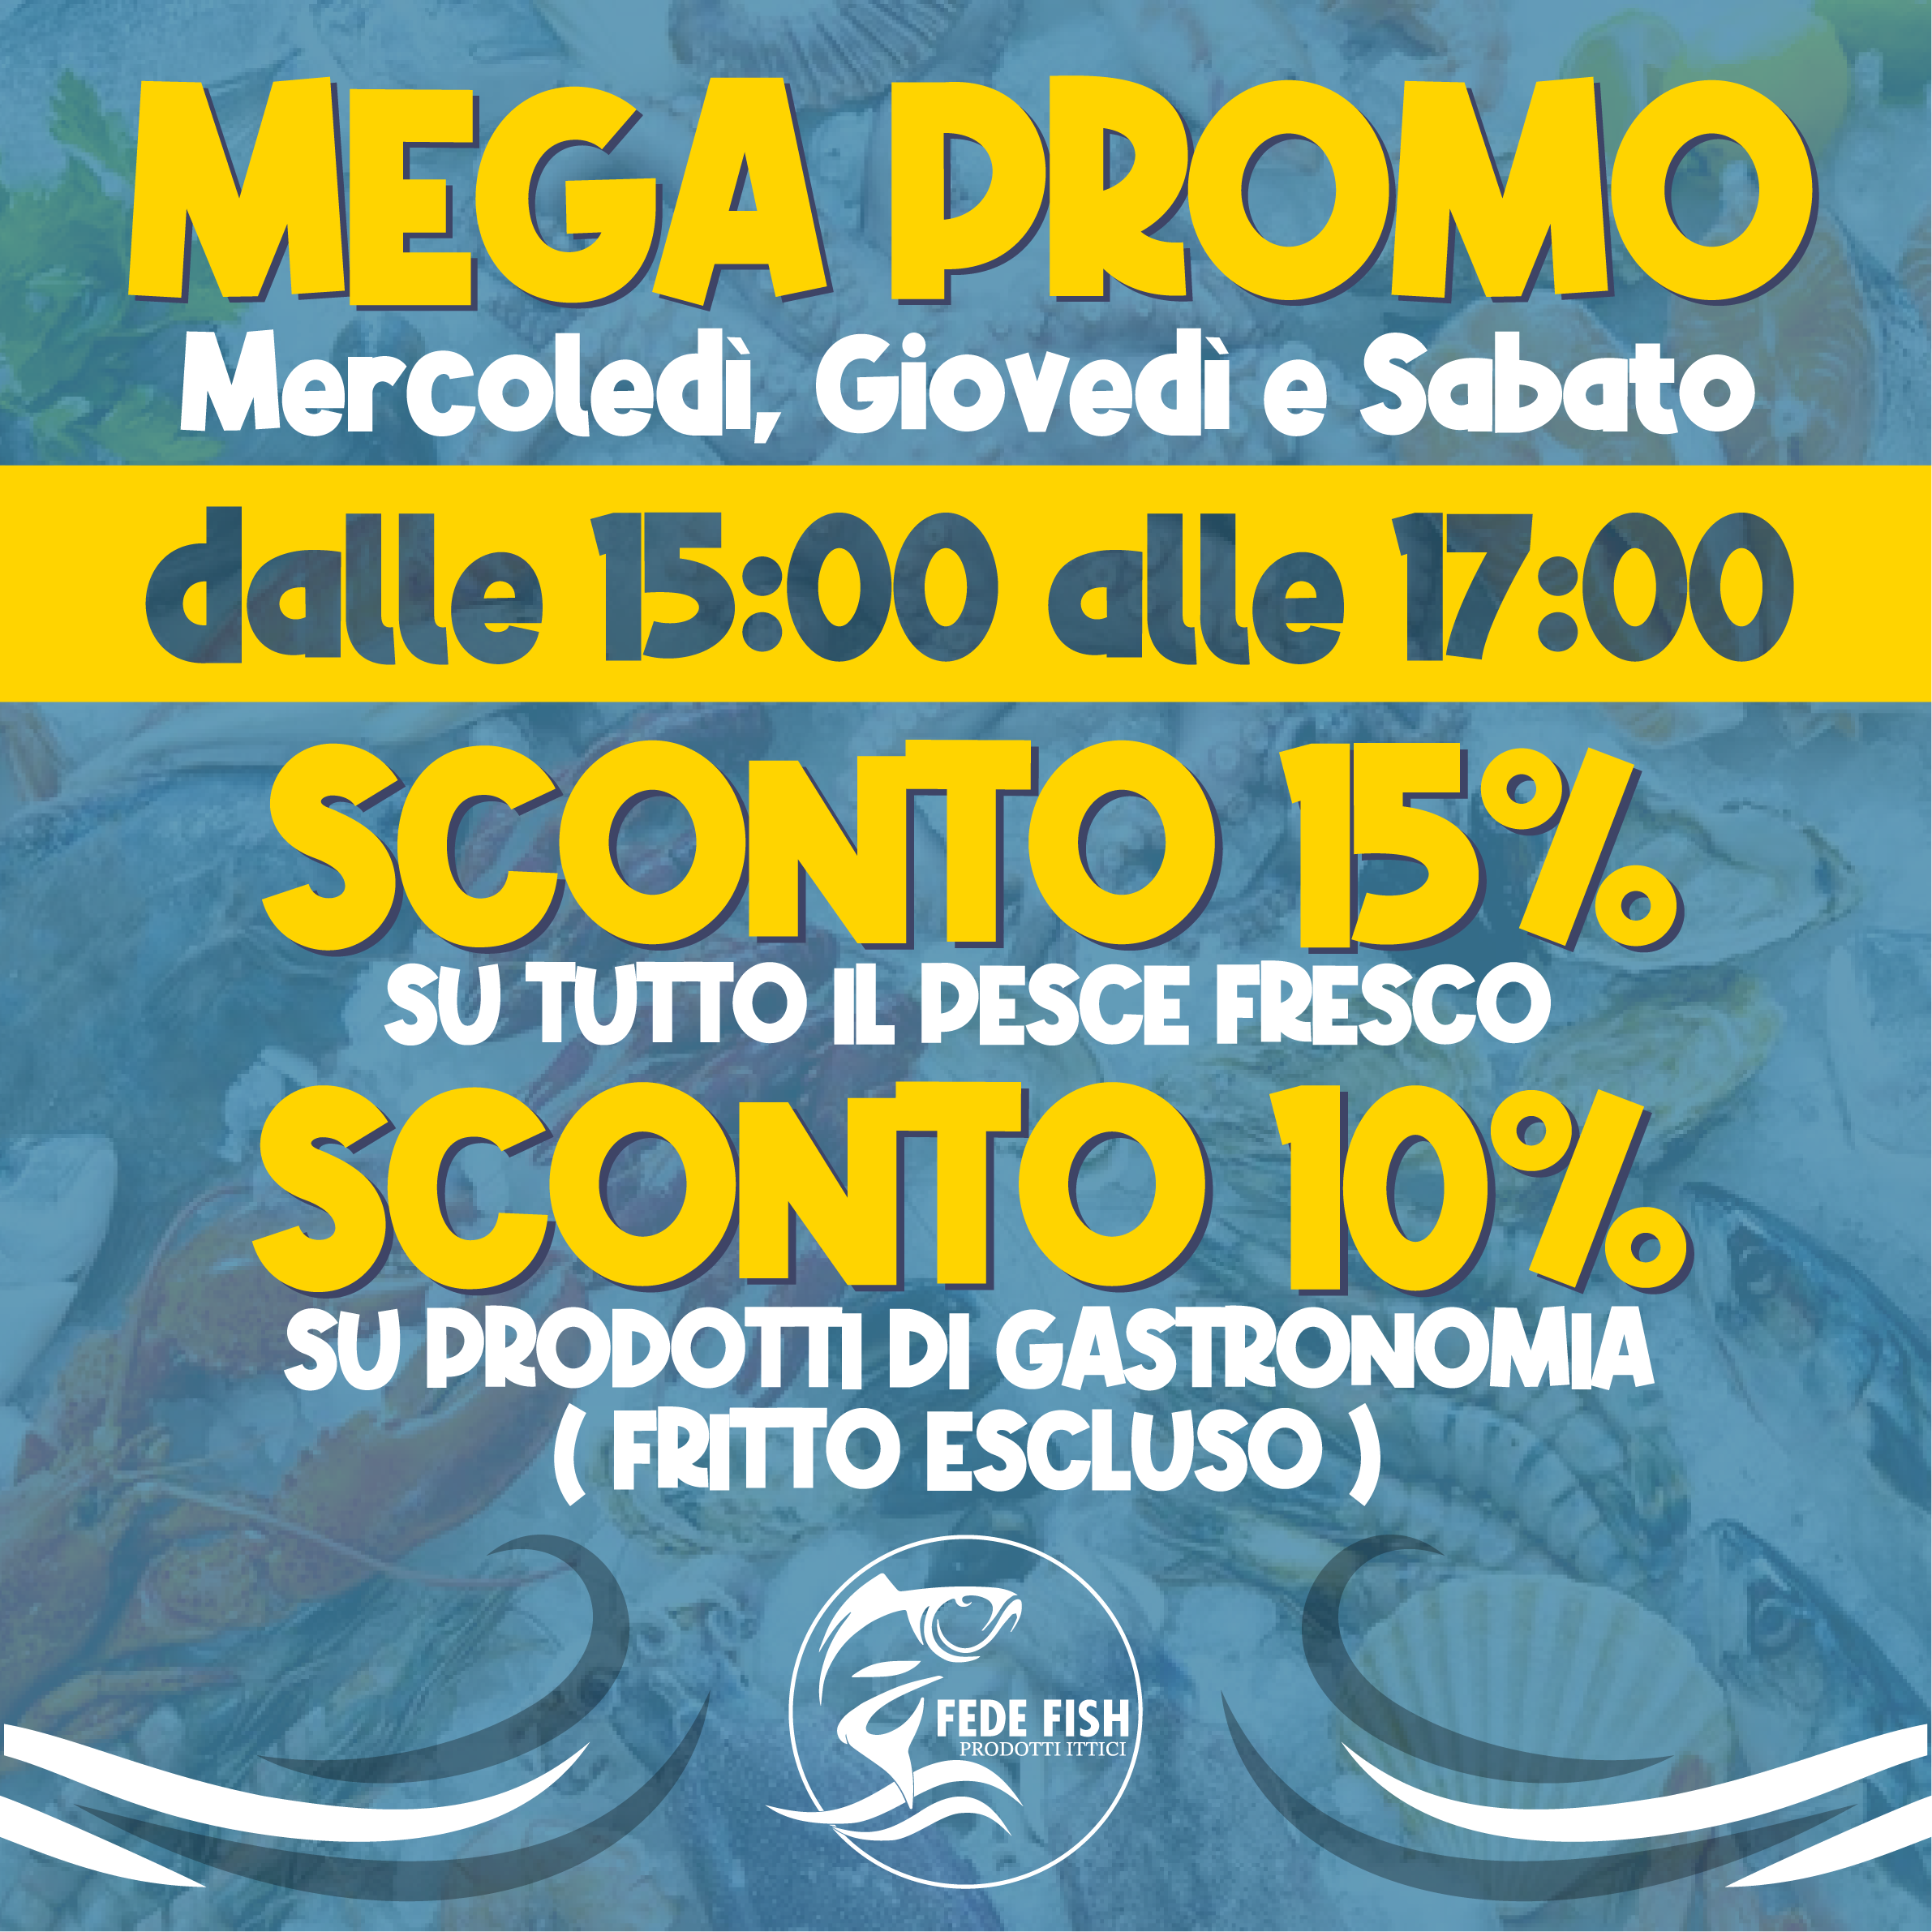 Promo MEGA PROMO - Fede Fish - Prodotti Ittici